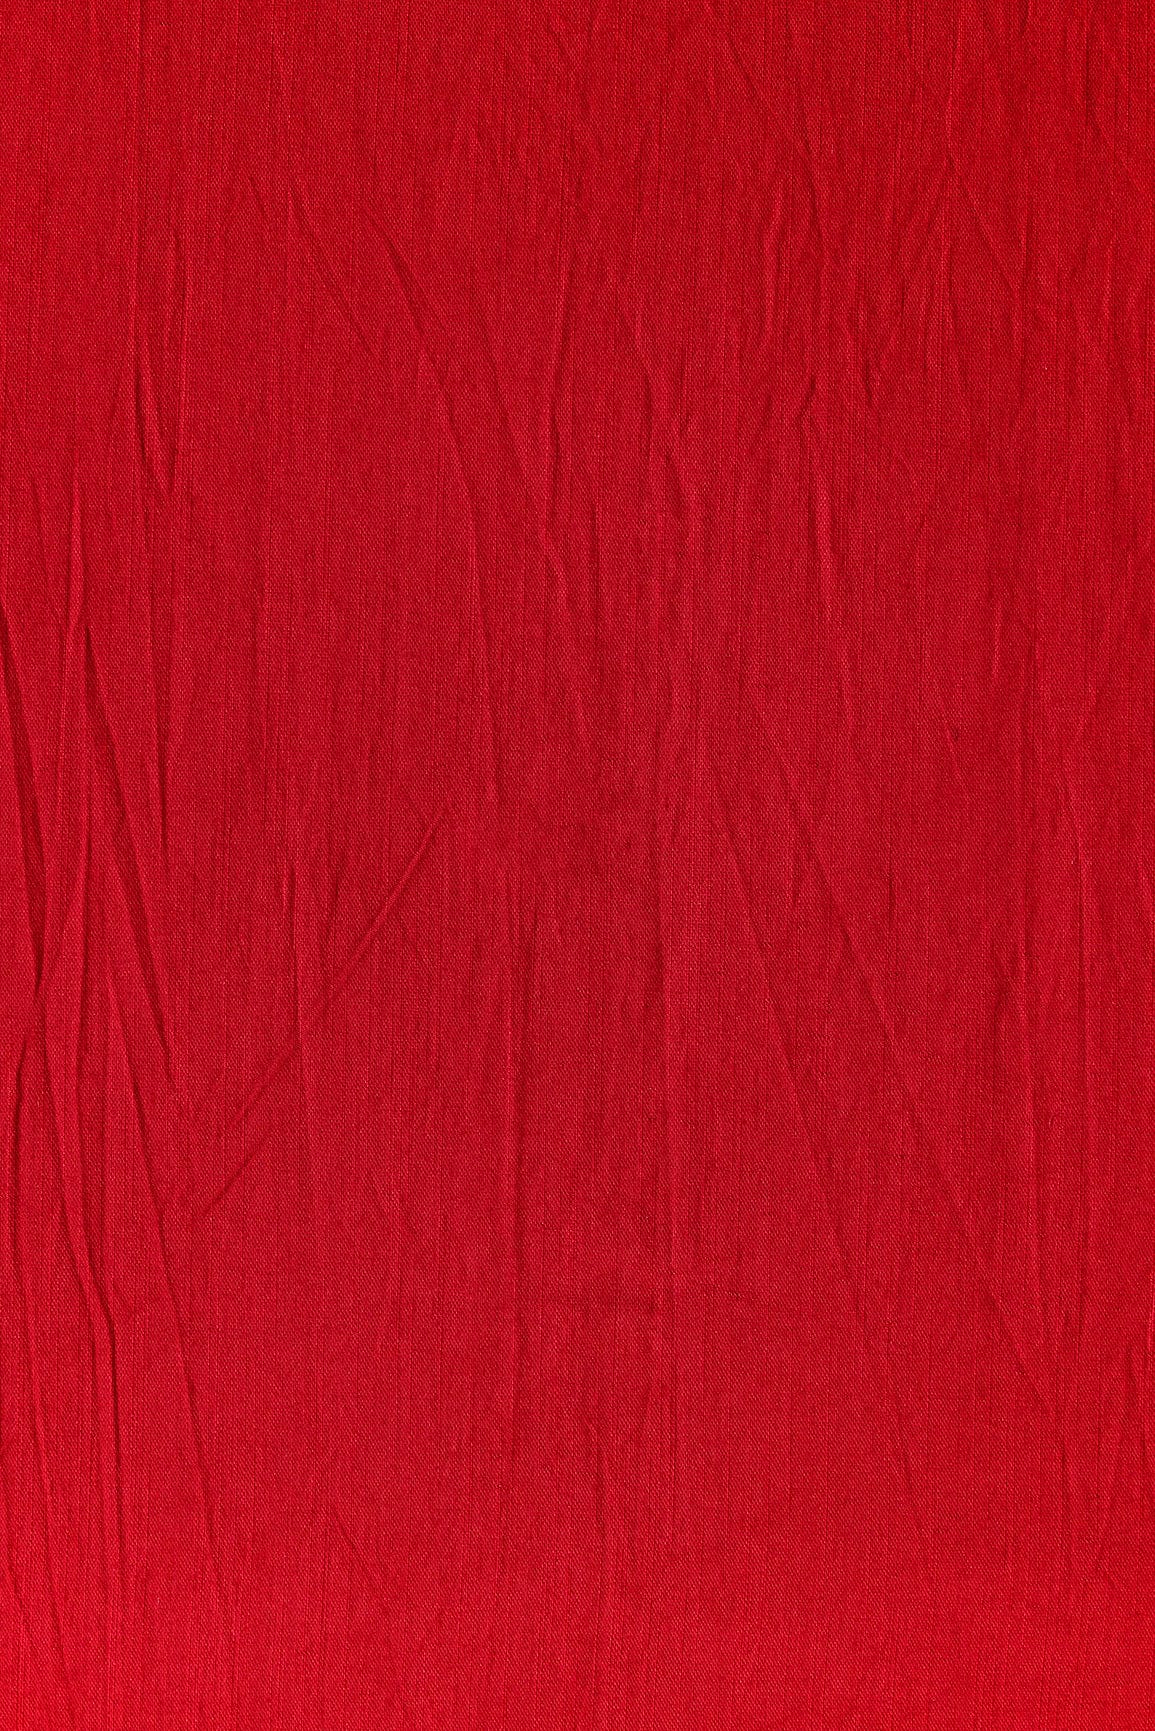 Red Raw Silk Fabric - doeraa